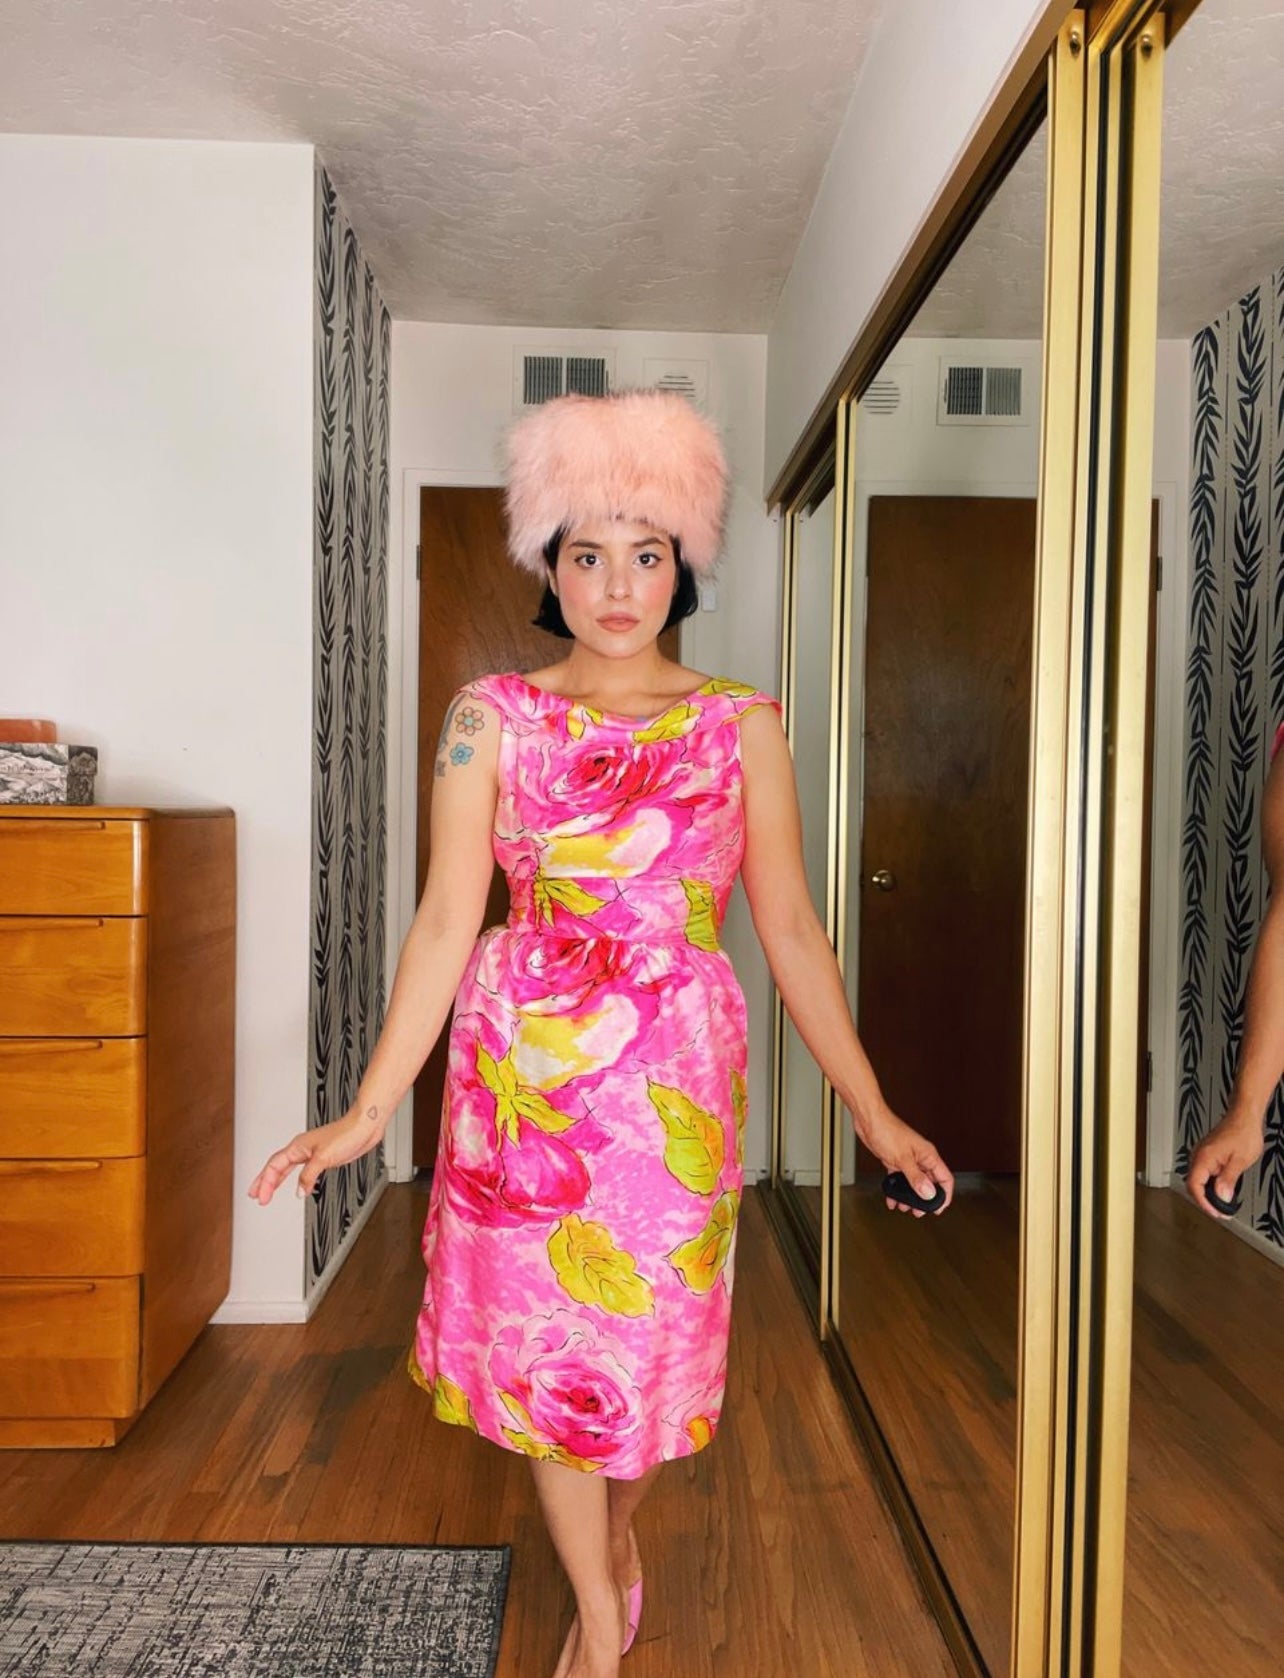 Vintage 60s Malcom Starr Neon Floral Wiggle Dress Fits XS-SM